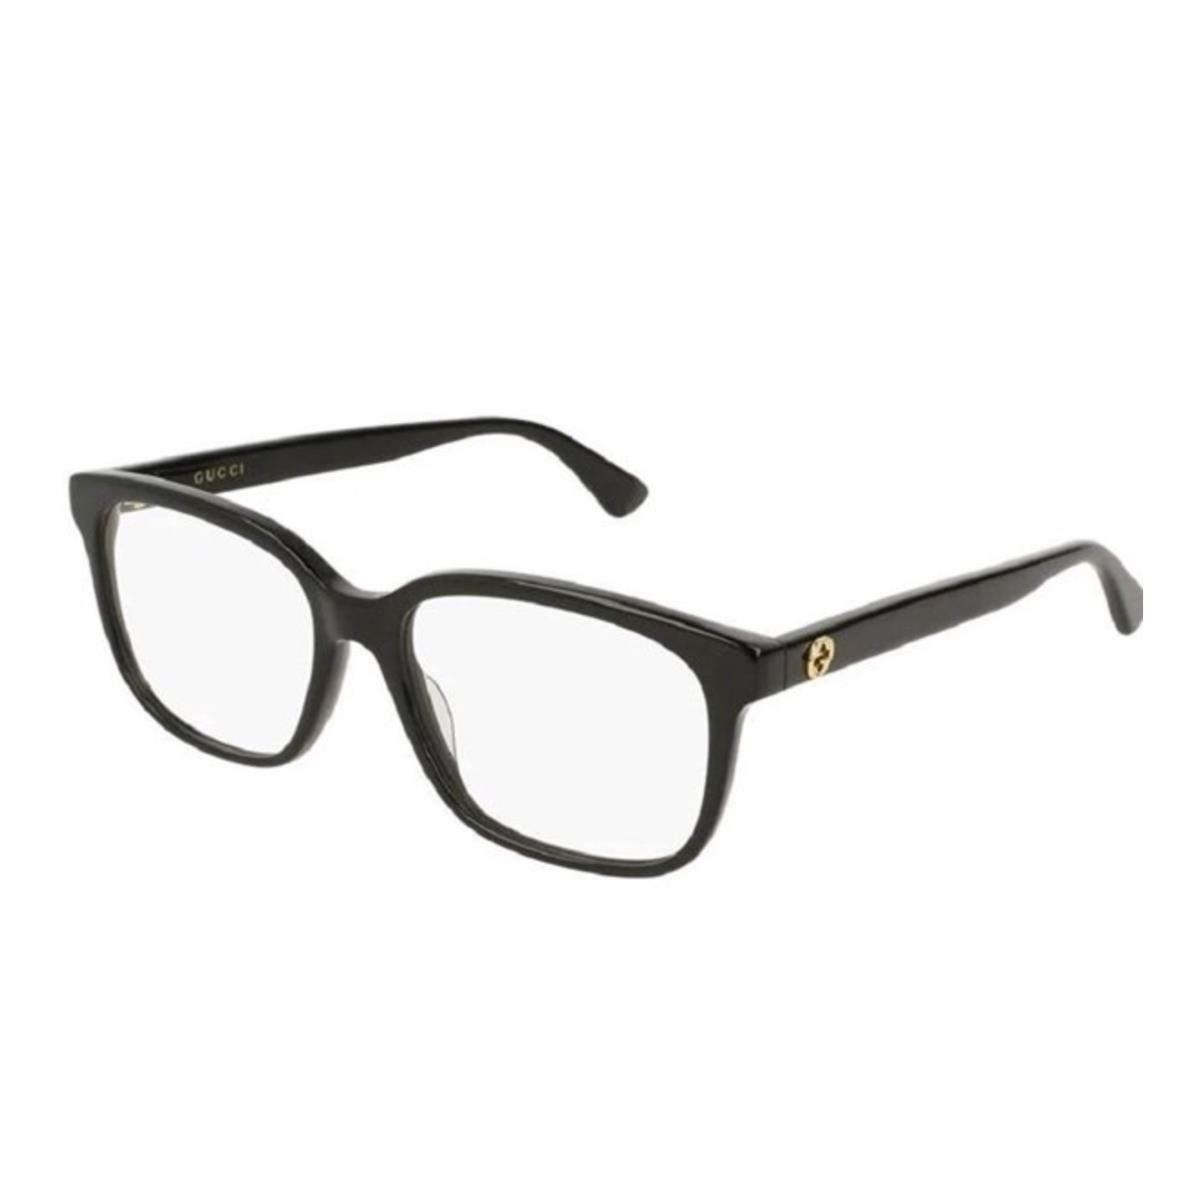 Gucci Eyeglasses GG0330O 001 53-17 145 Black Rectangular Frames W/gold Logos - Frame: Black, Lens: